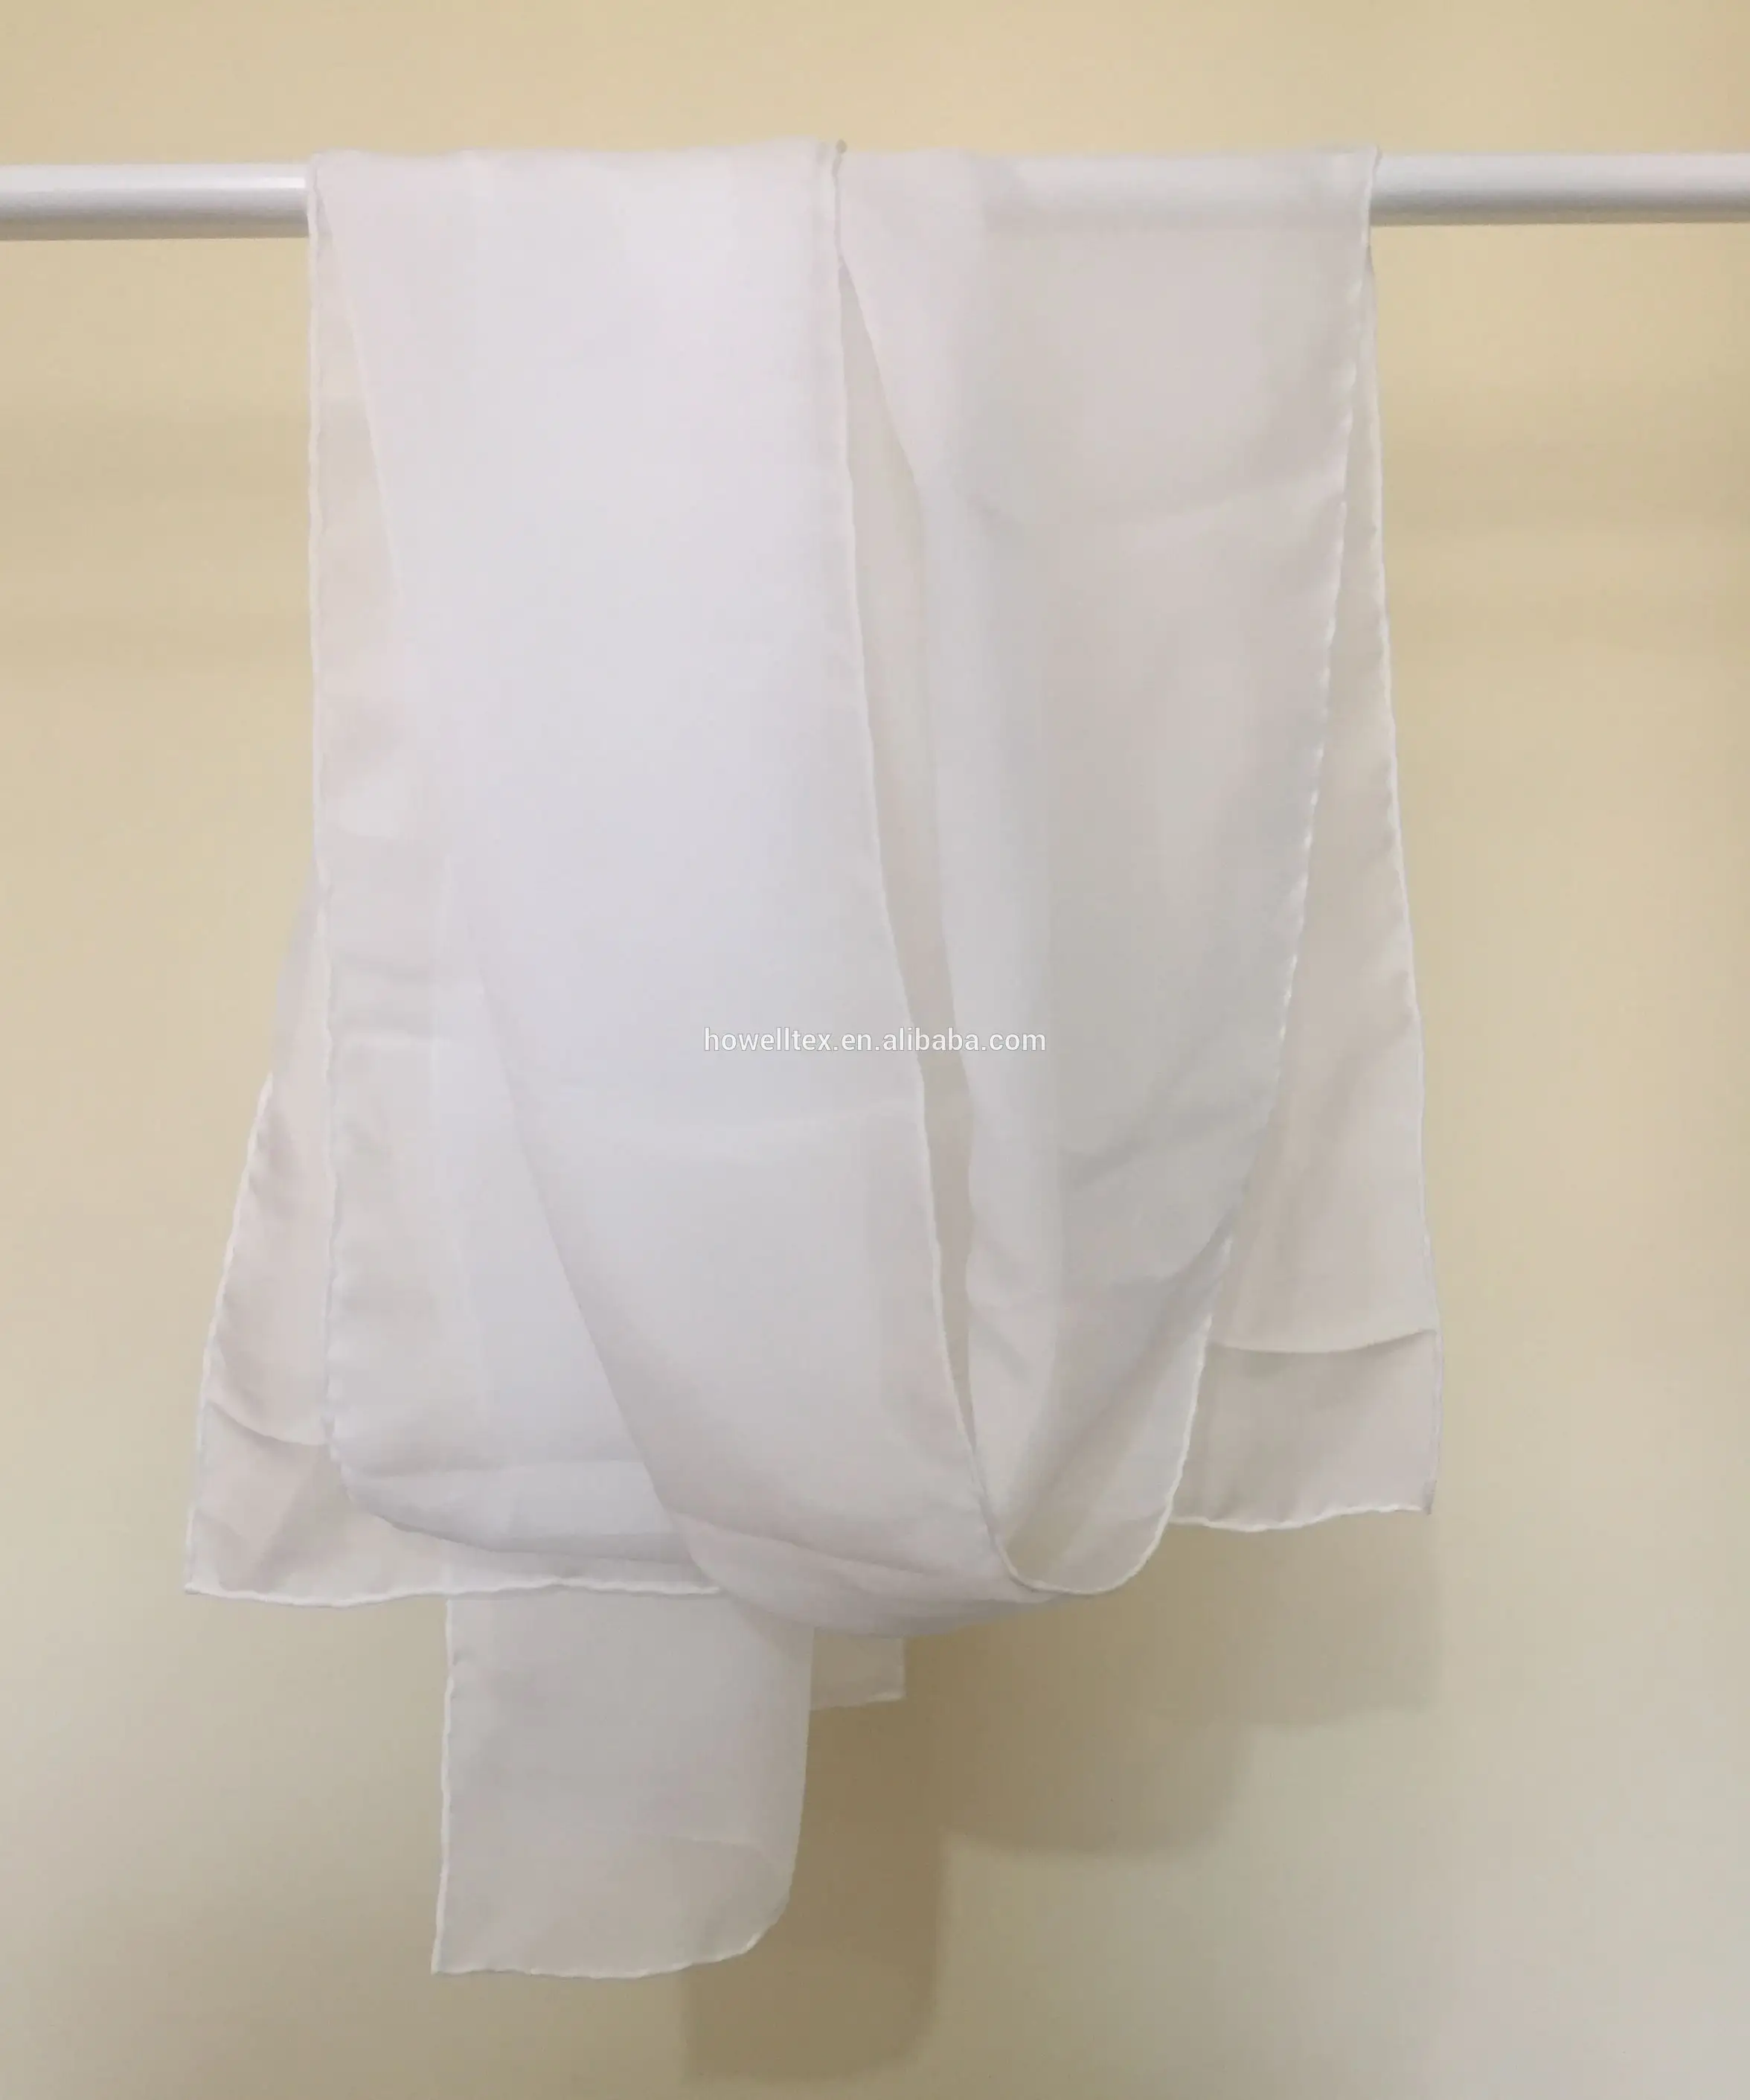 Silk Chiffon Fabric 100% Organic Natural 12mm 54" Width White Not Dyed Woven HOWELL Plain Sudanese Women Toub 8mm Medium Weight